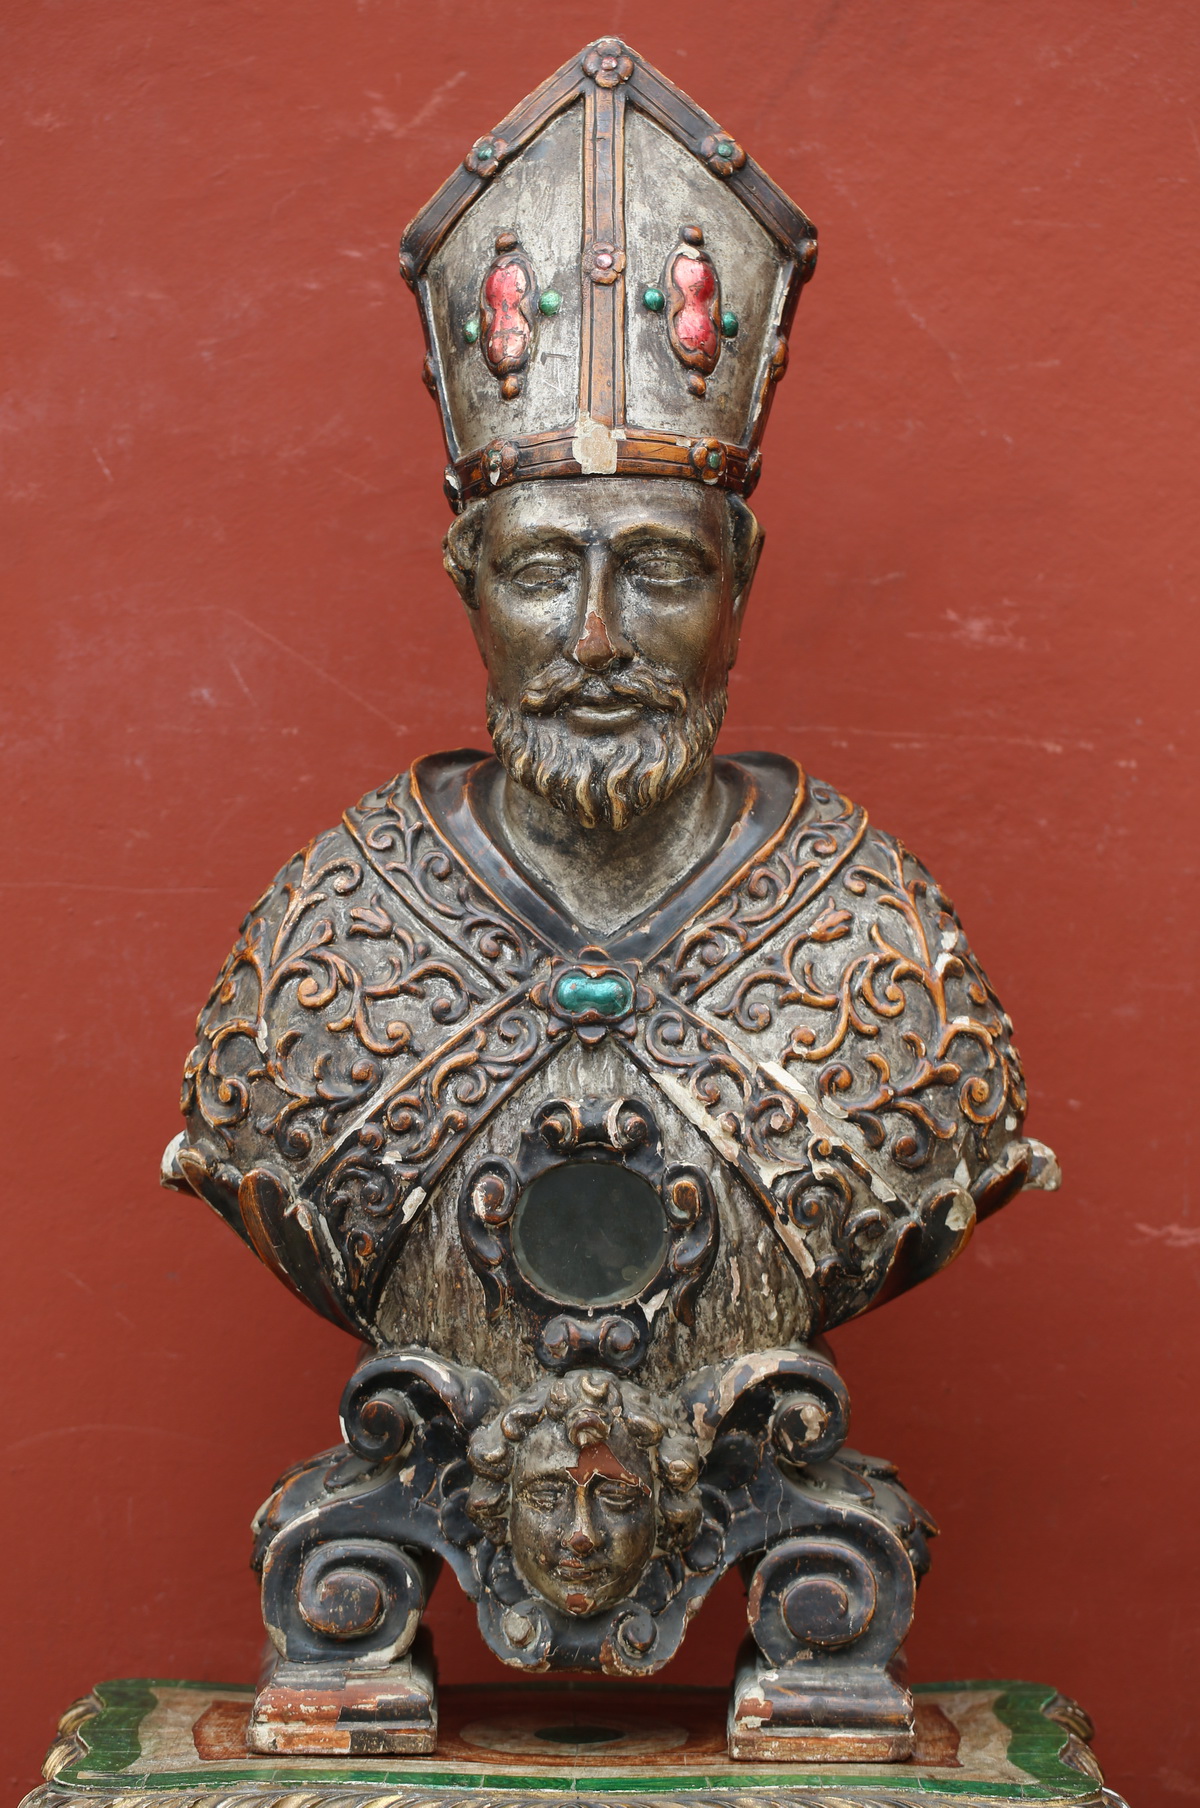 Paire de bustes reliquaire Italie XVIII